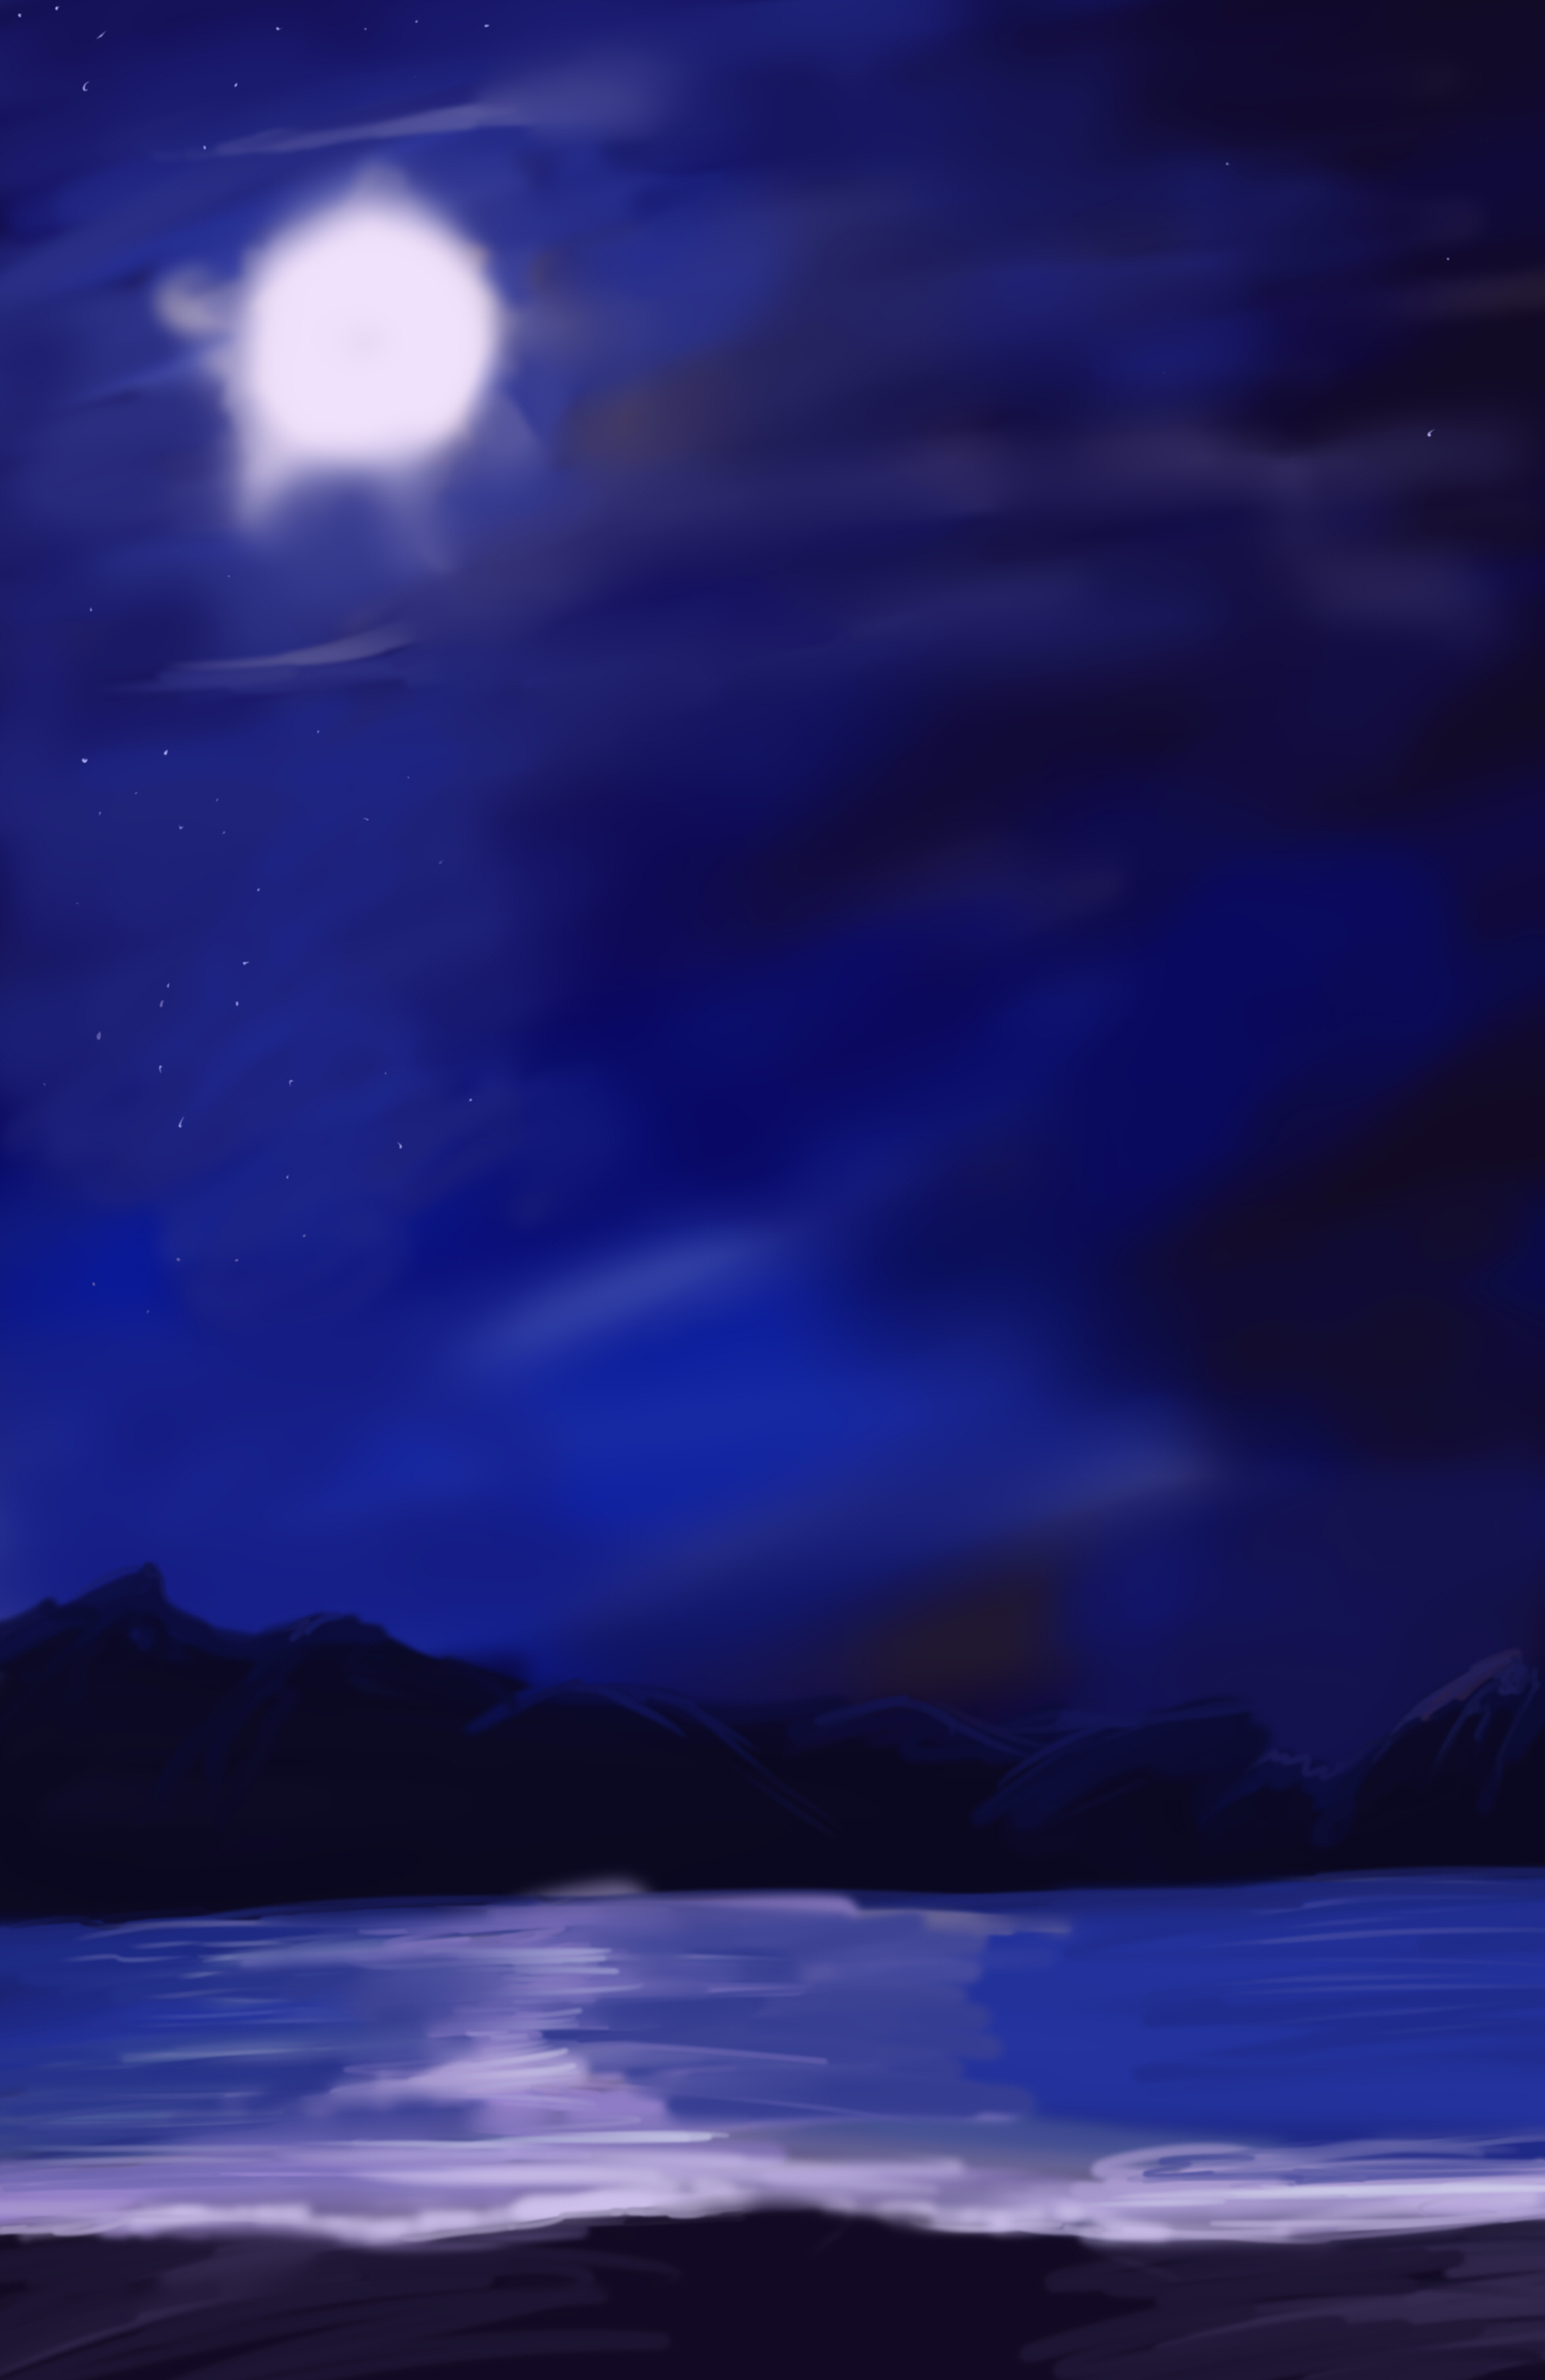 Anime Night Beach Background by wbd on DeviantArt